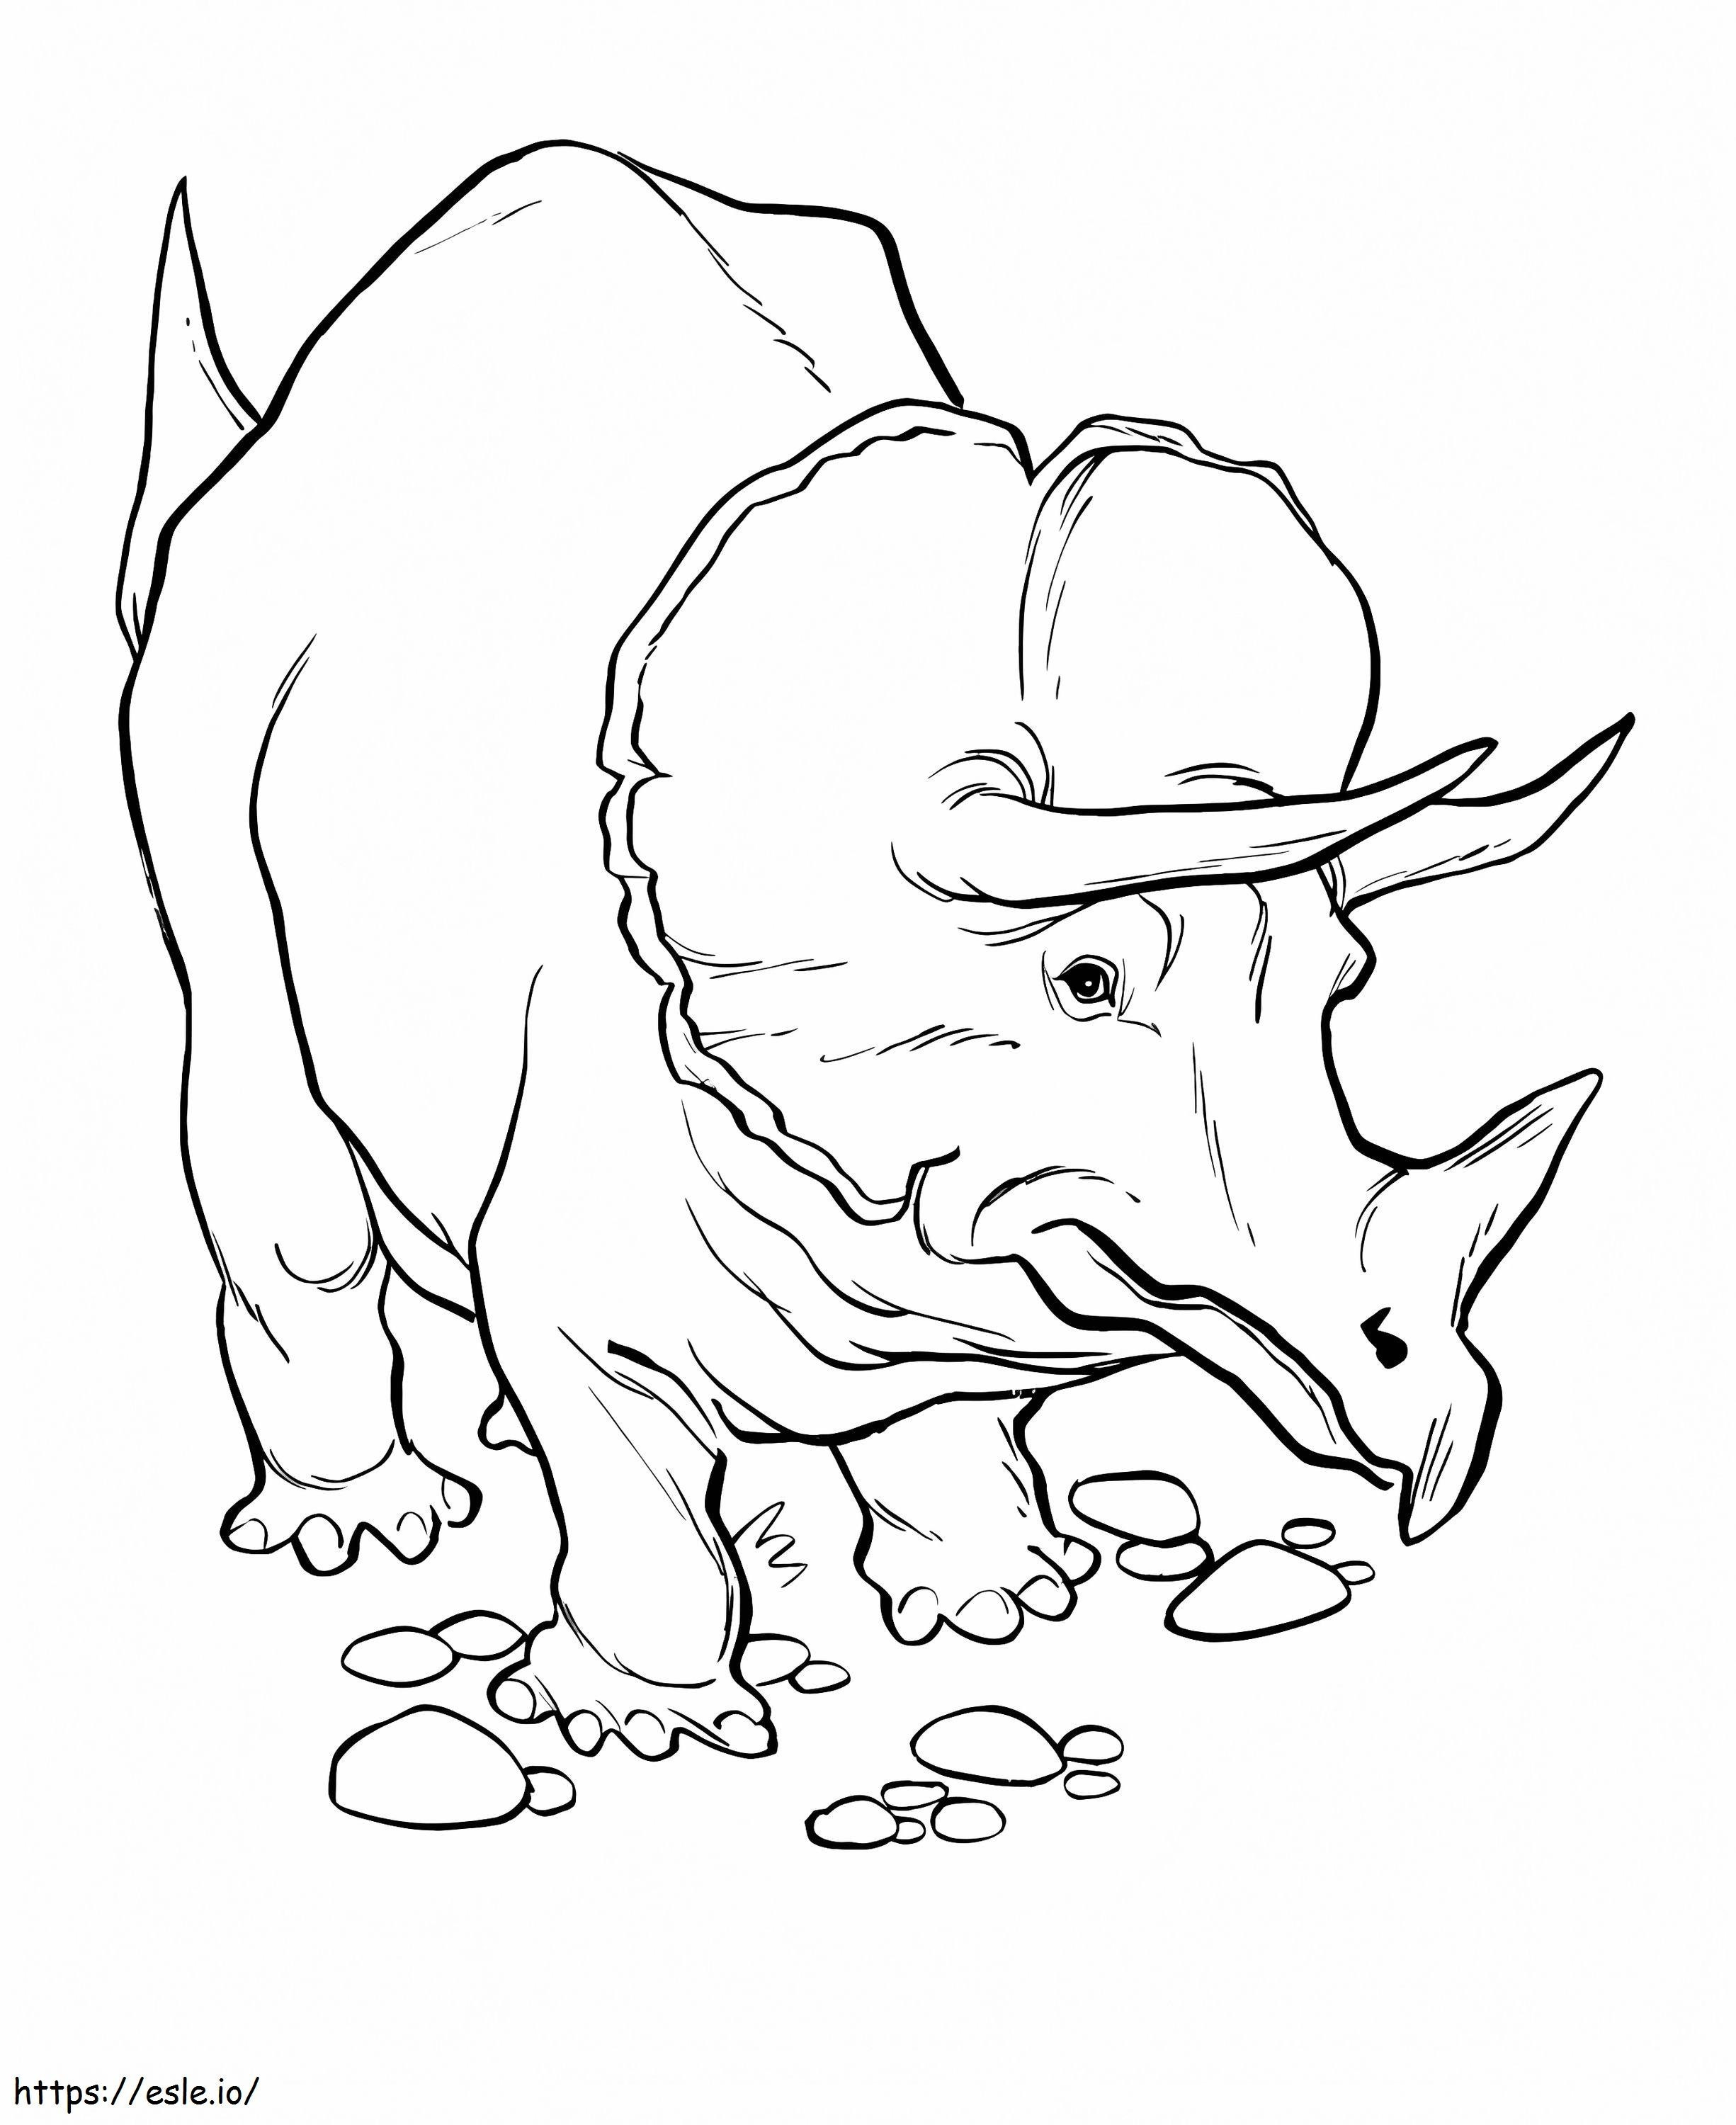 Coloriage Dinosaure Tricératops 3 à imprimer dessin